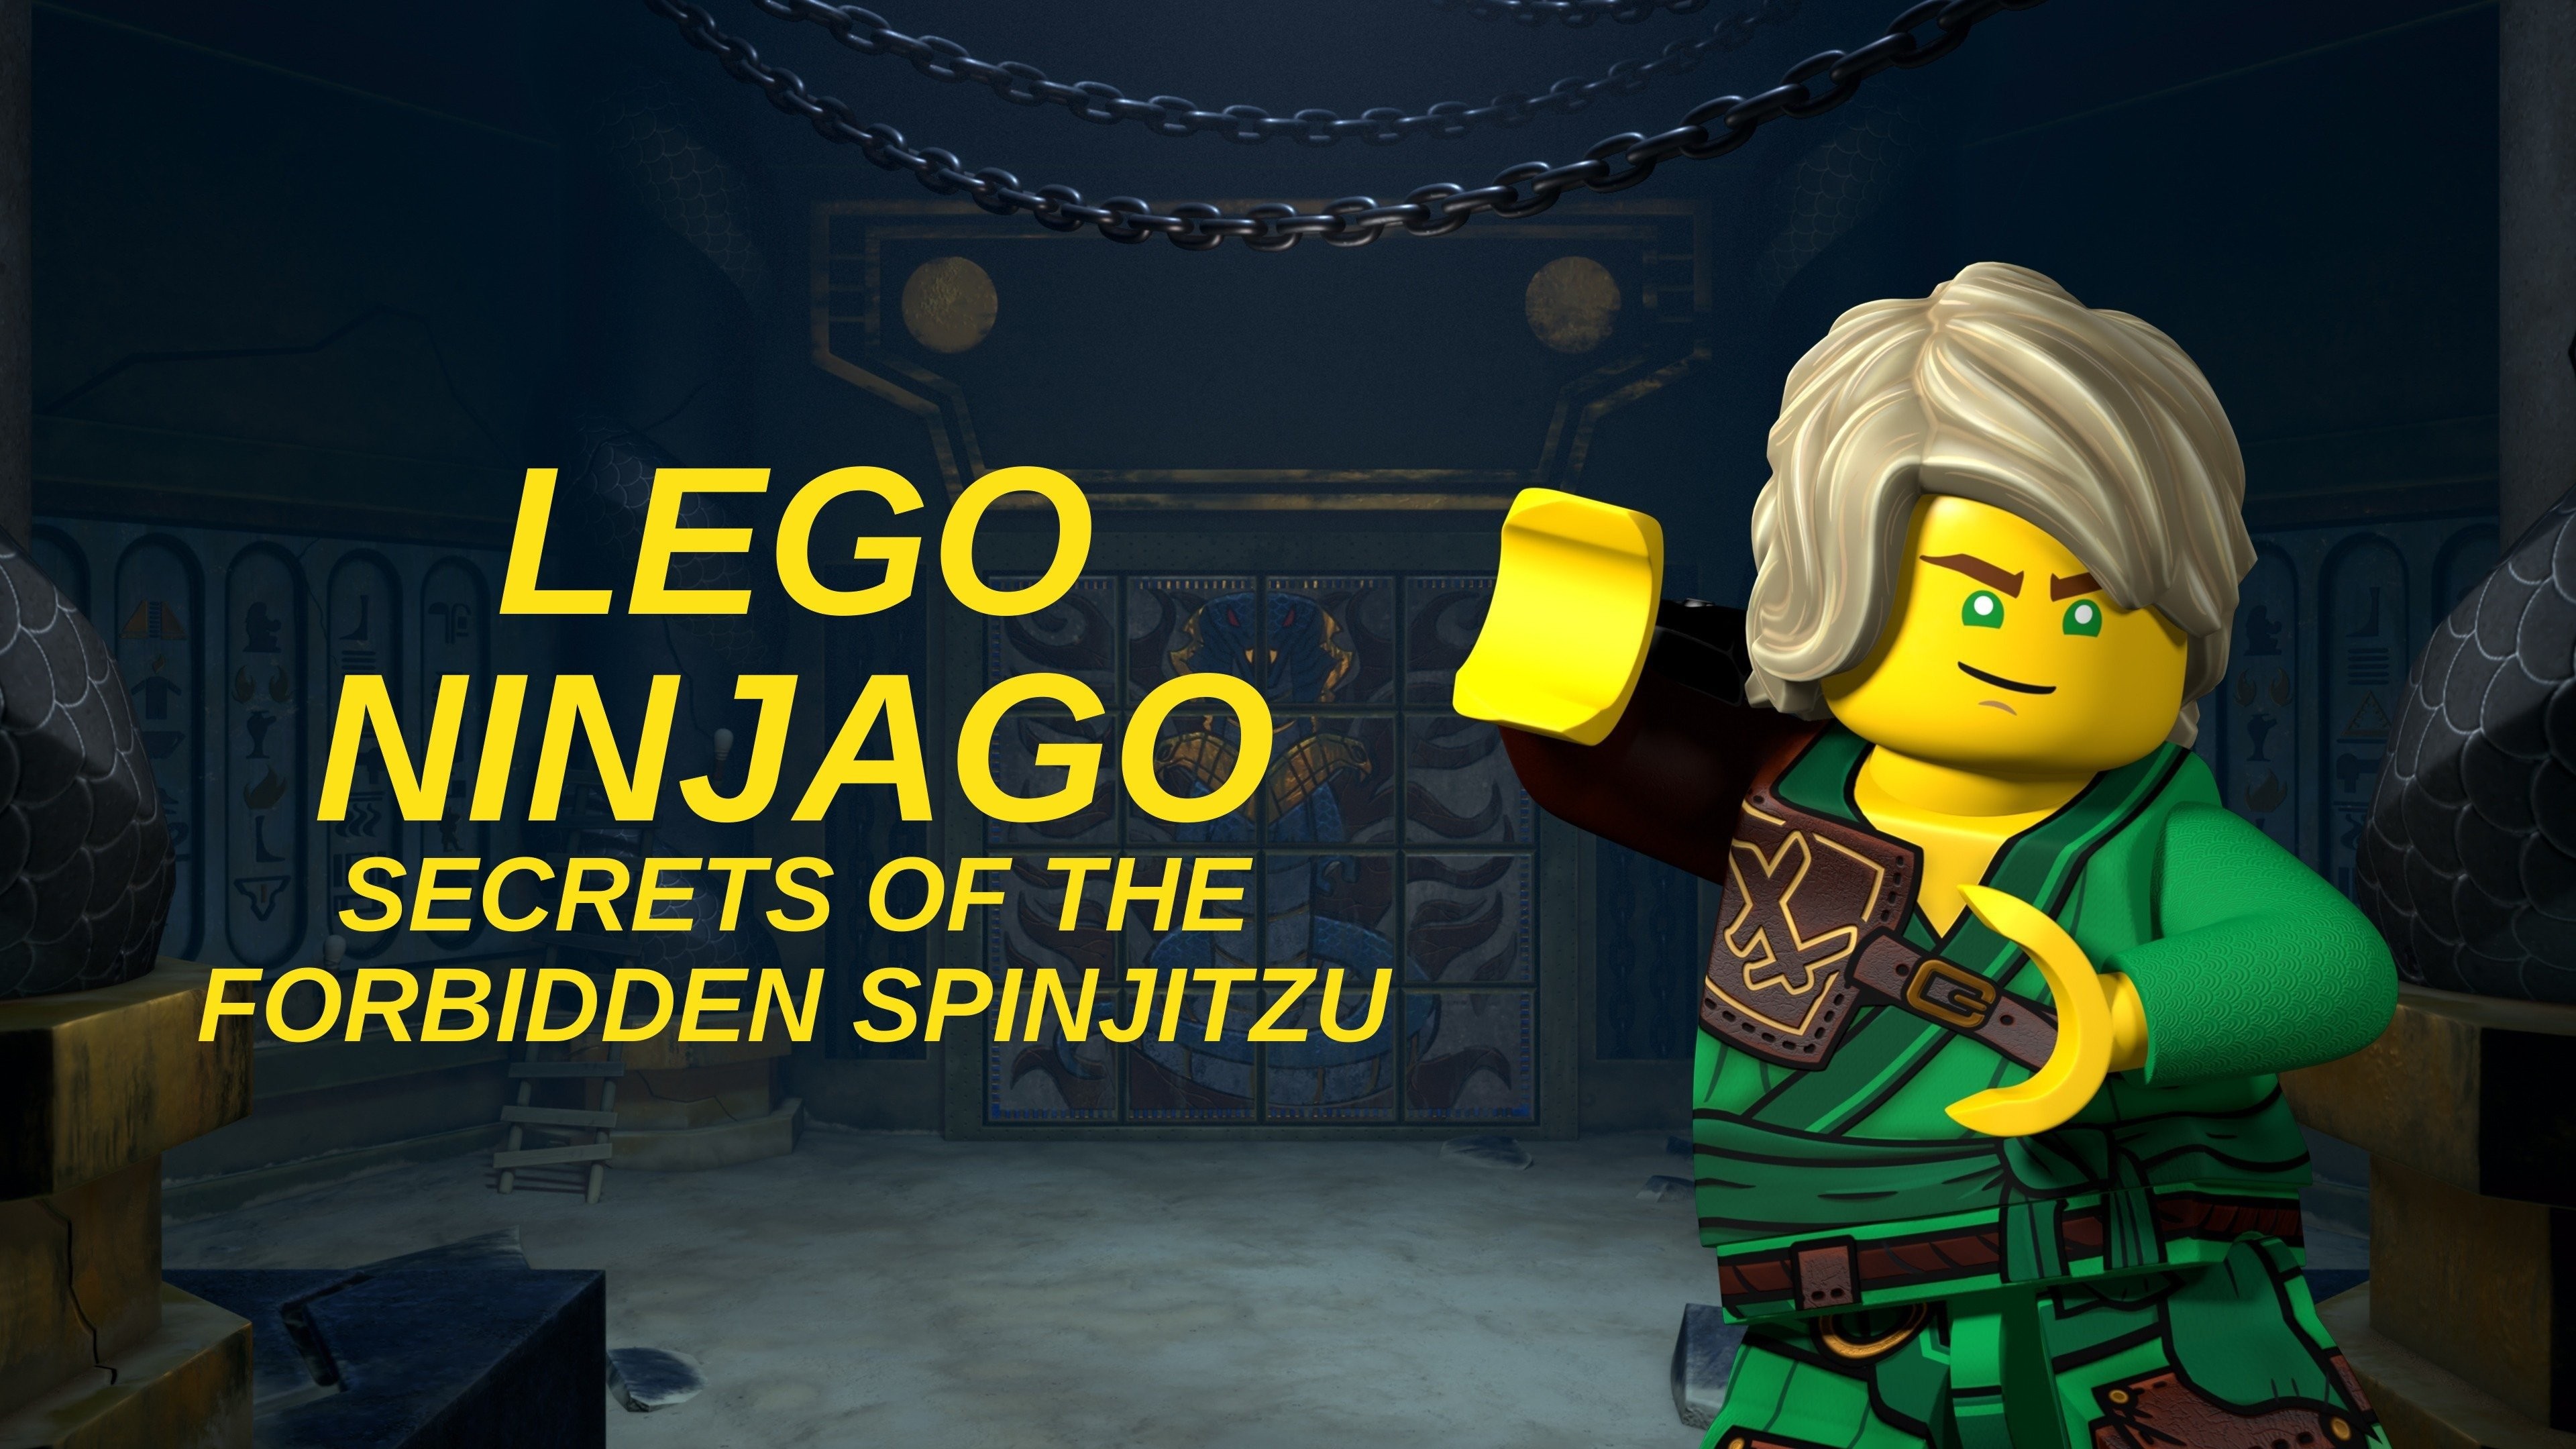 Ninjago: Secrets of the Forbidden Spinjitzu - Wikipedia